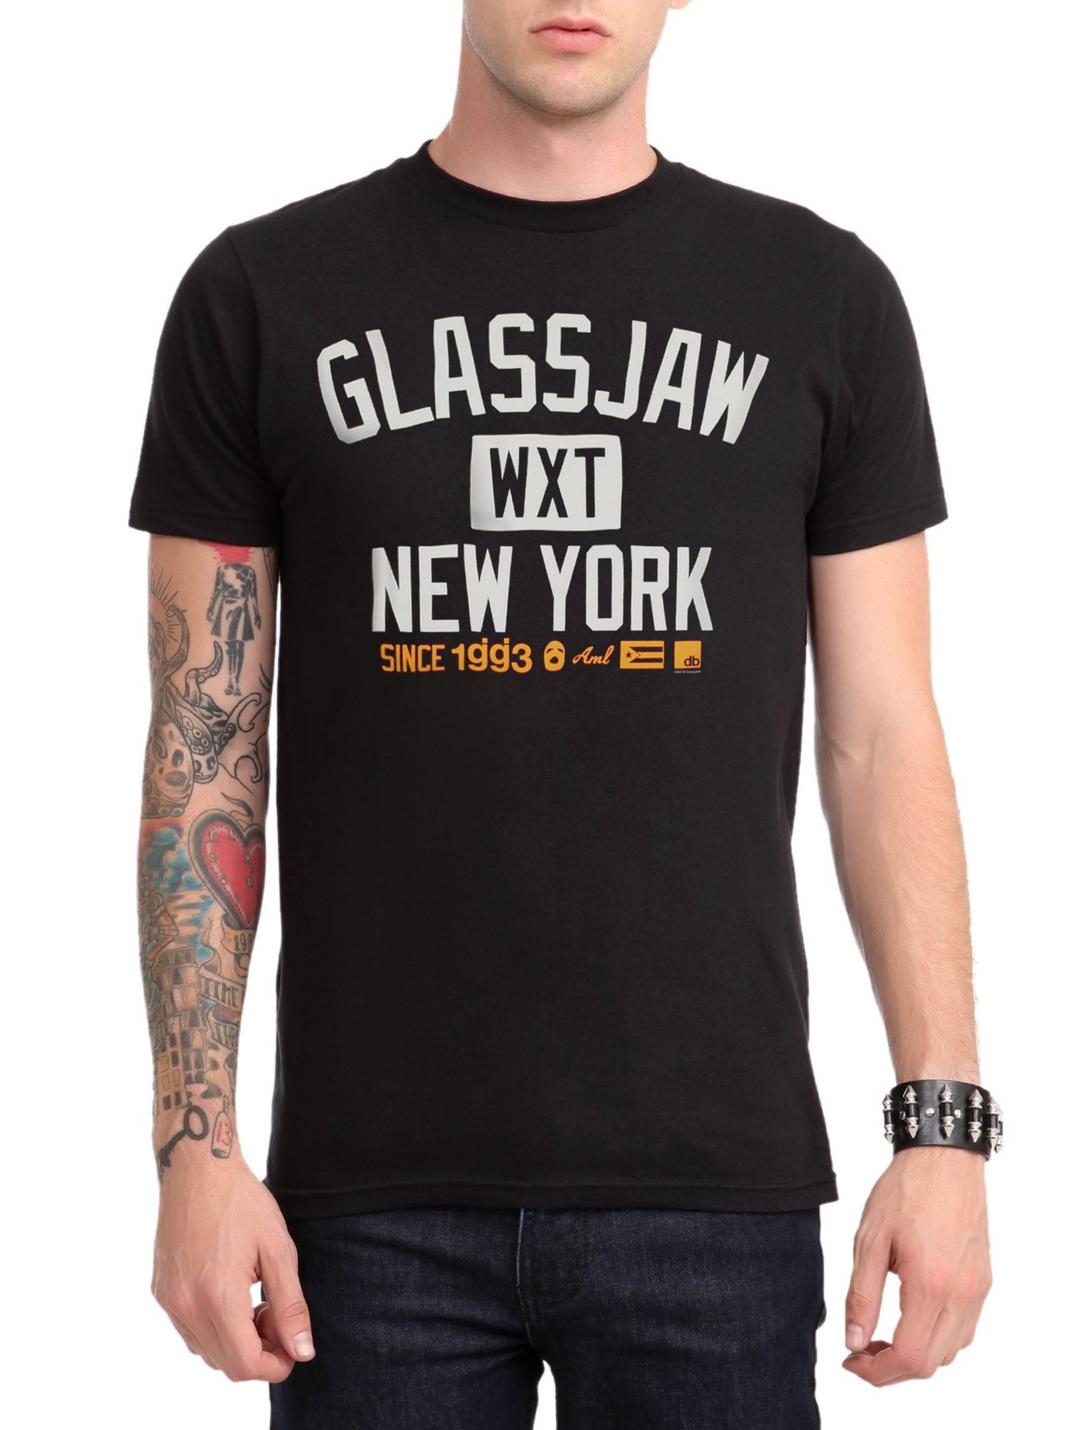 Glassjaw New York WXT T-Shirt, BLACK, hi-res